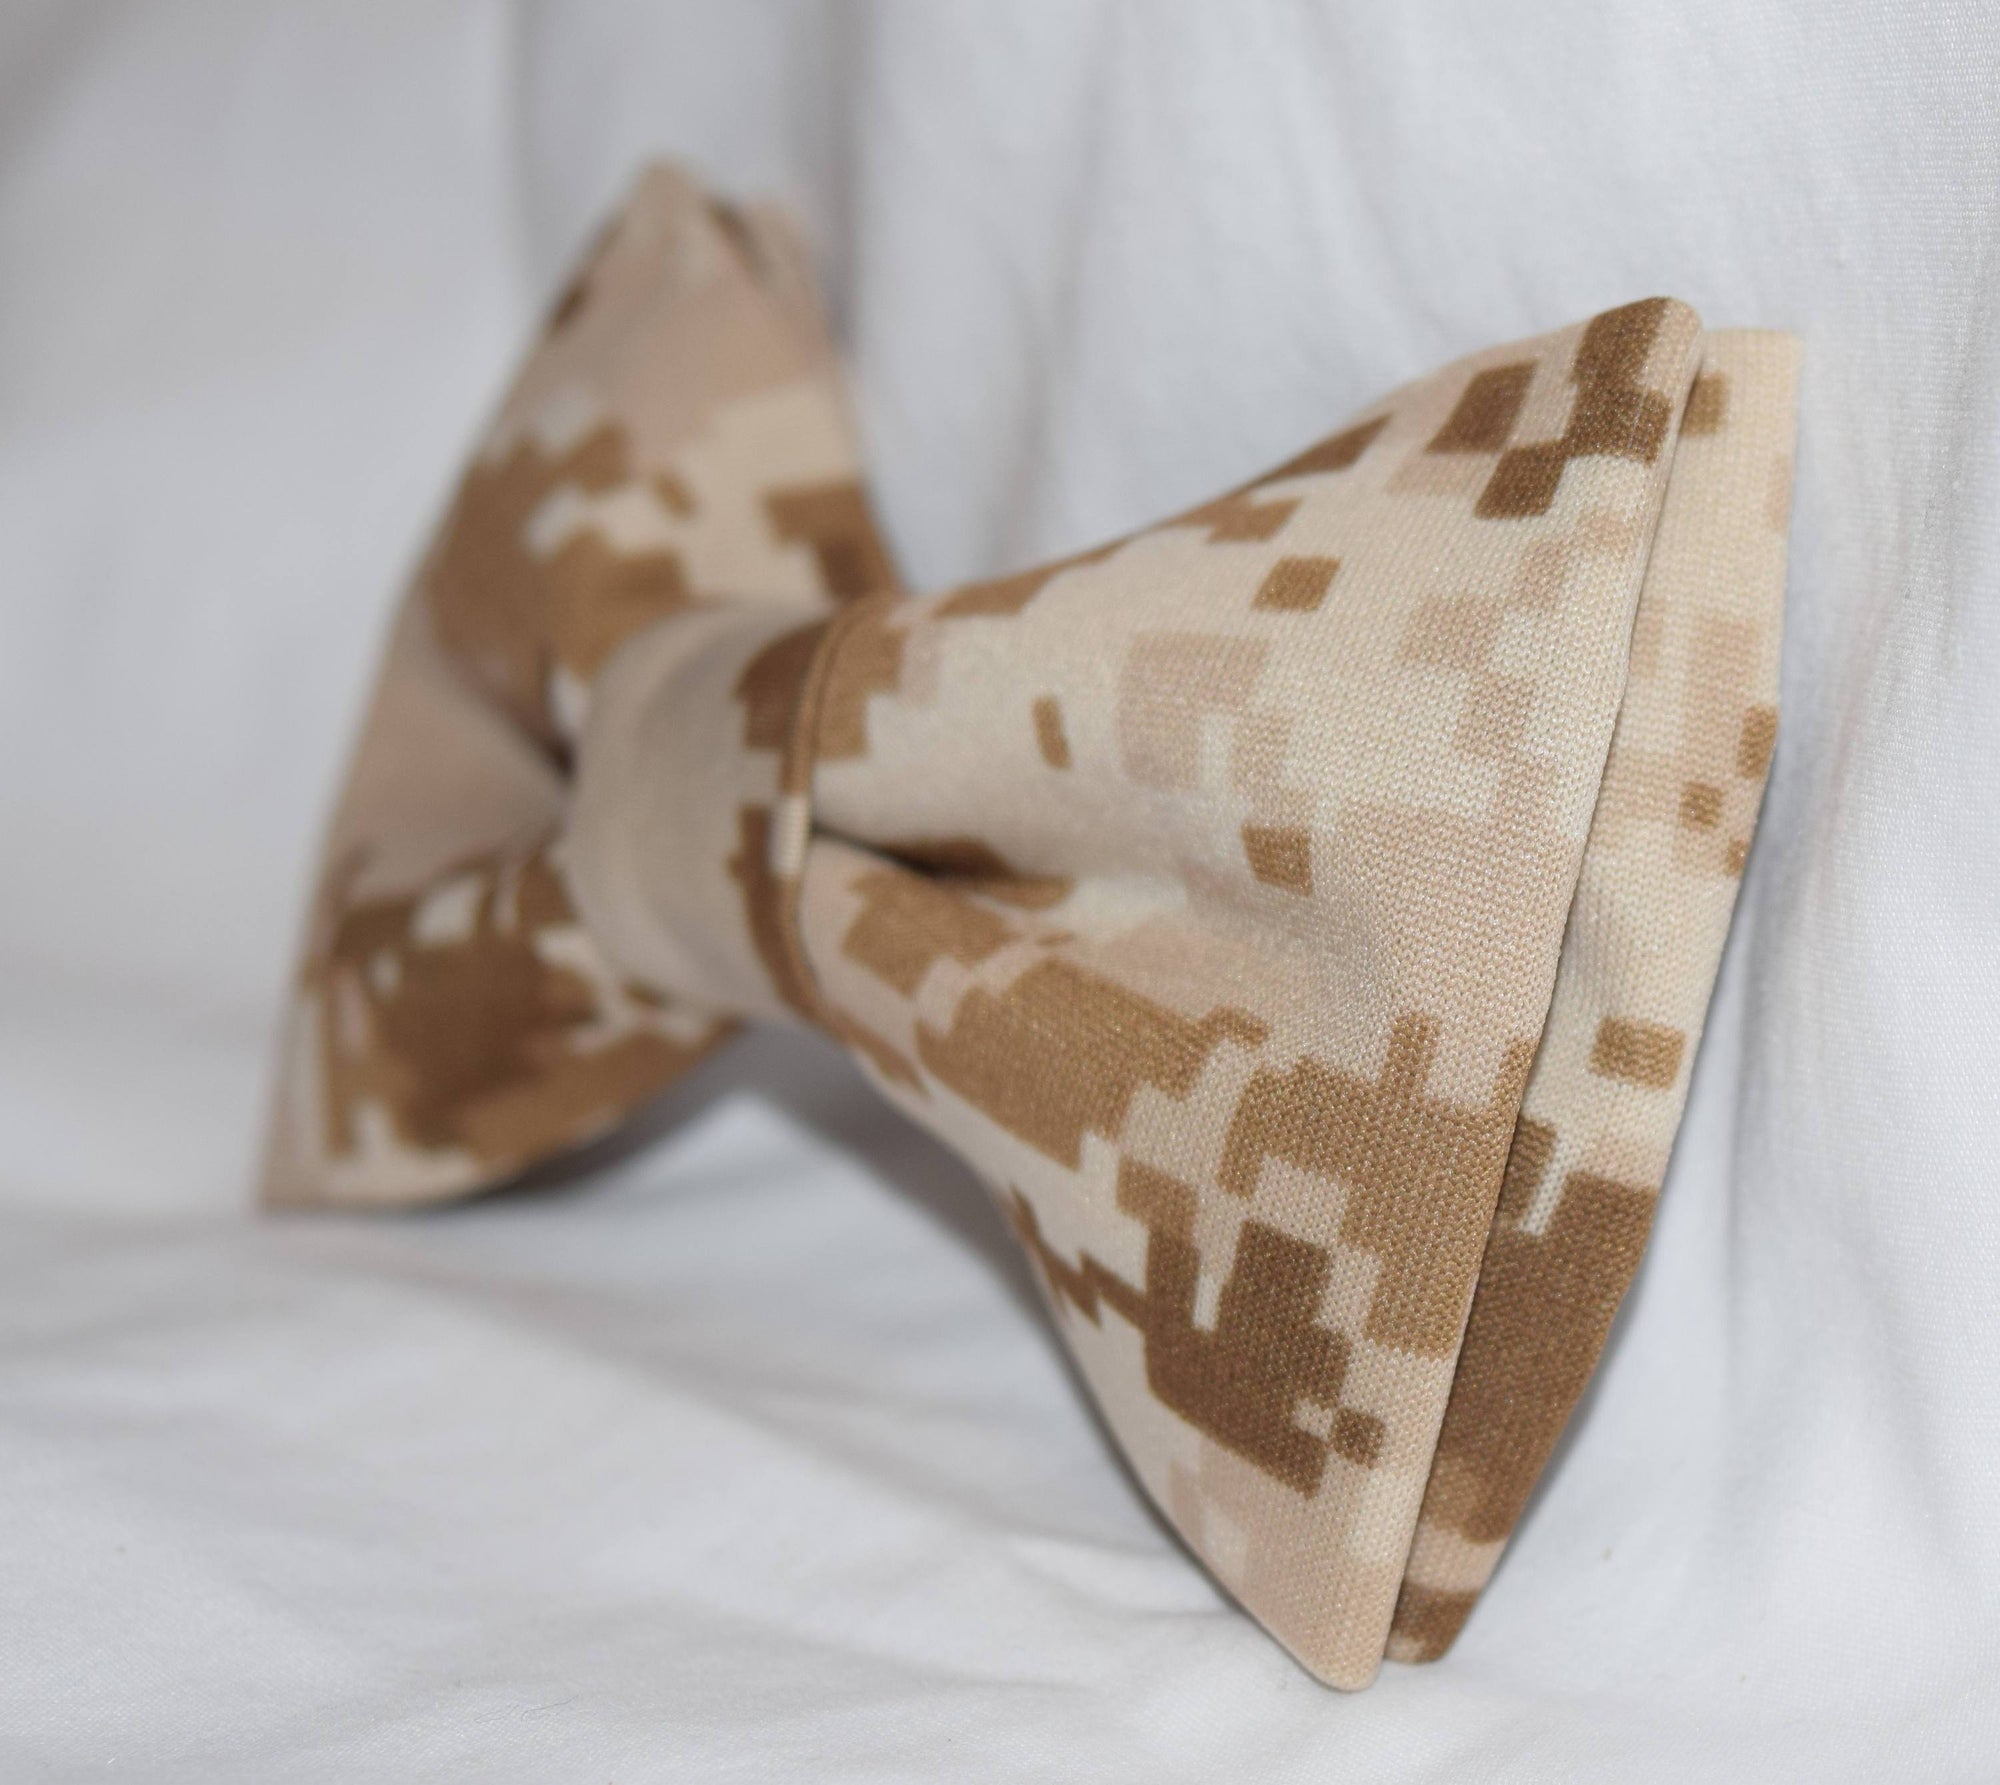 CookiBloom bow tie Marine Desert Camo Clip-On Bow tie